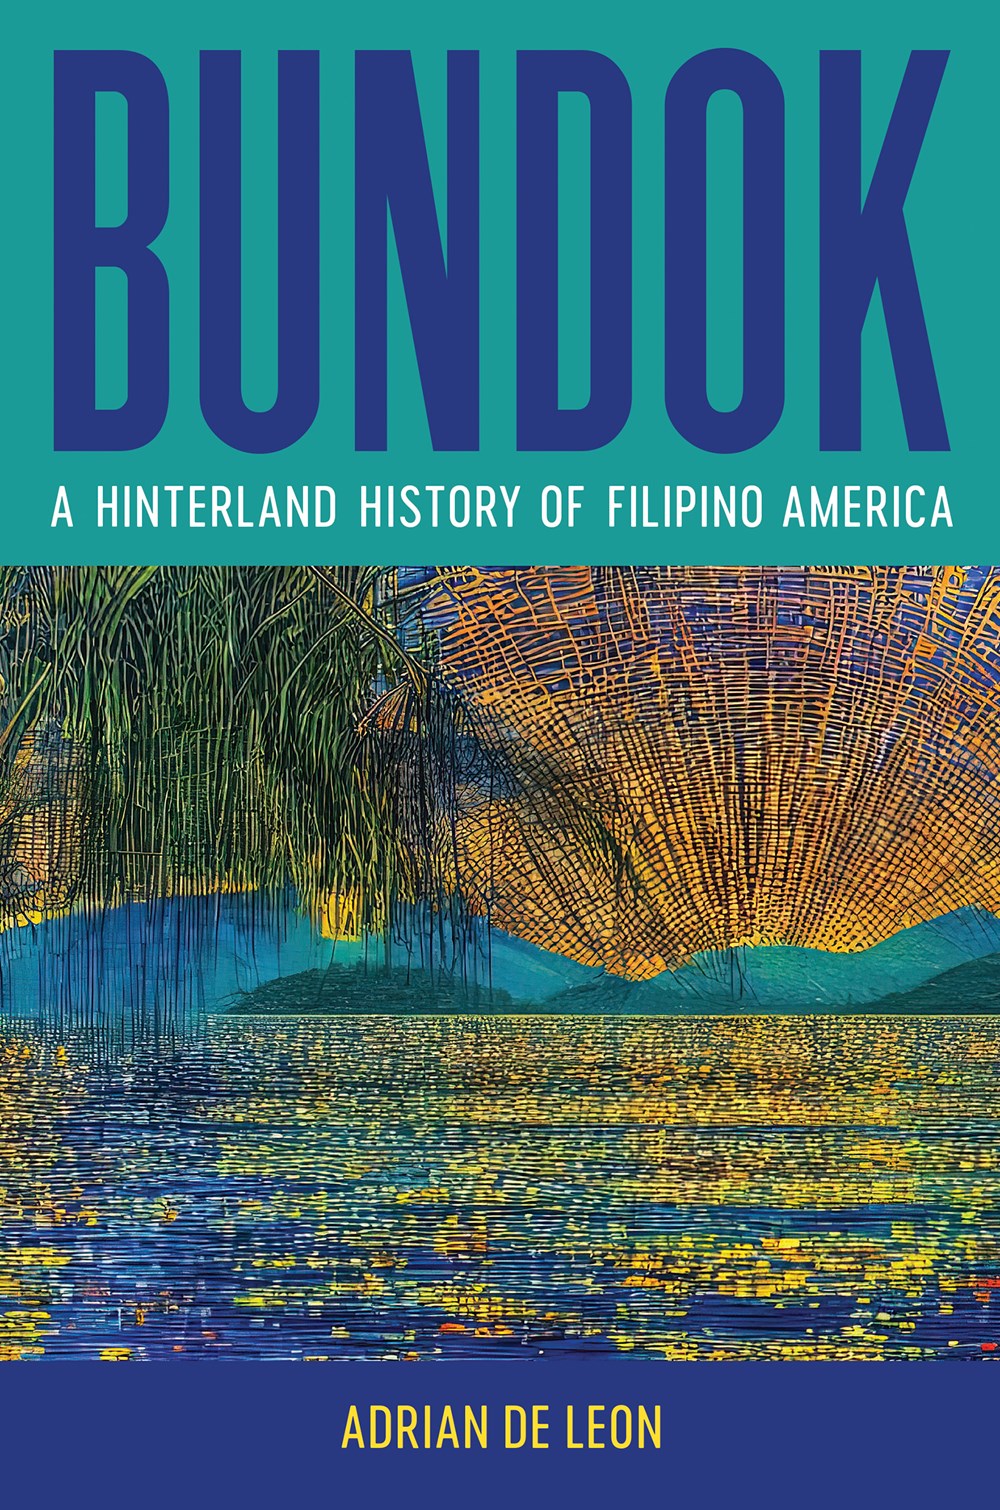 Bundok: A Hinterland History of Filipino America